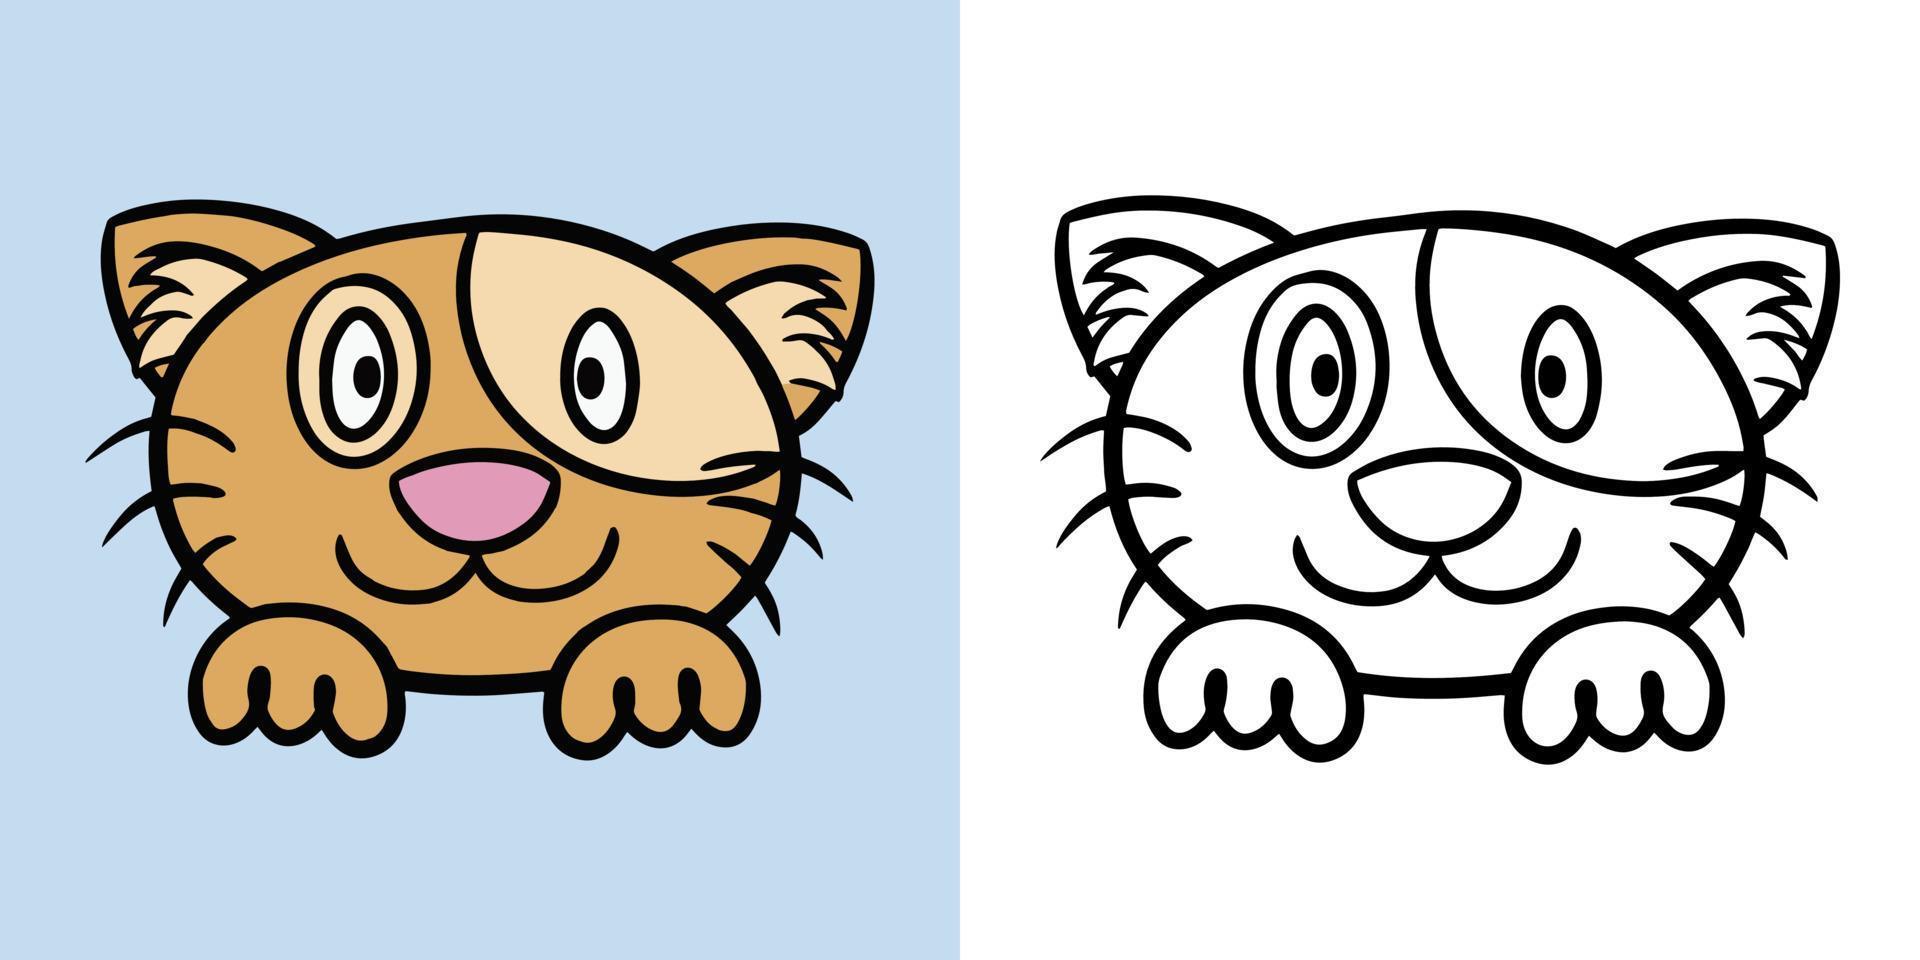 Orange happy cat, smiling cat, cartoon style, Horizontal set of illustrations for coloring books, vector illustration